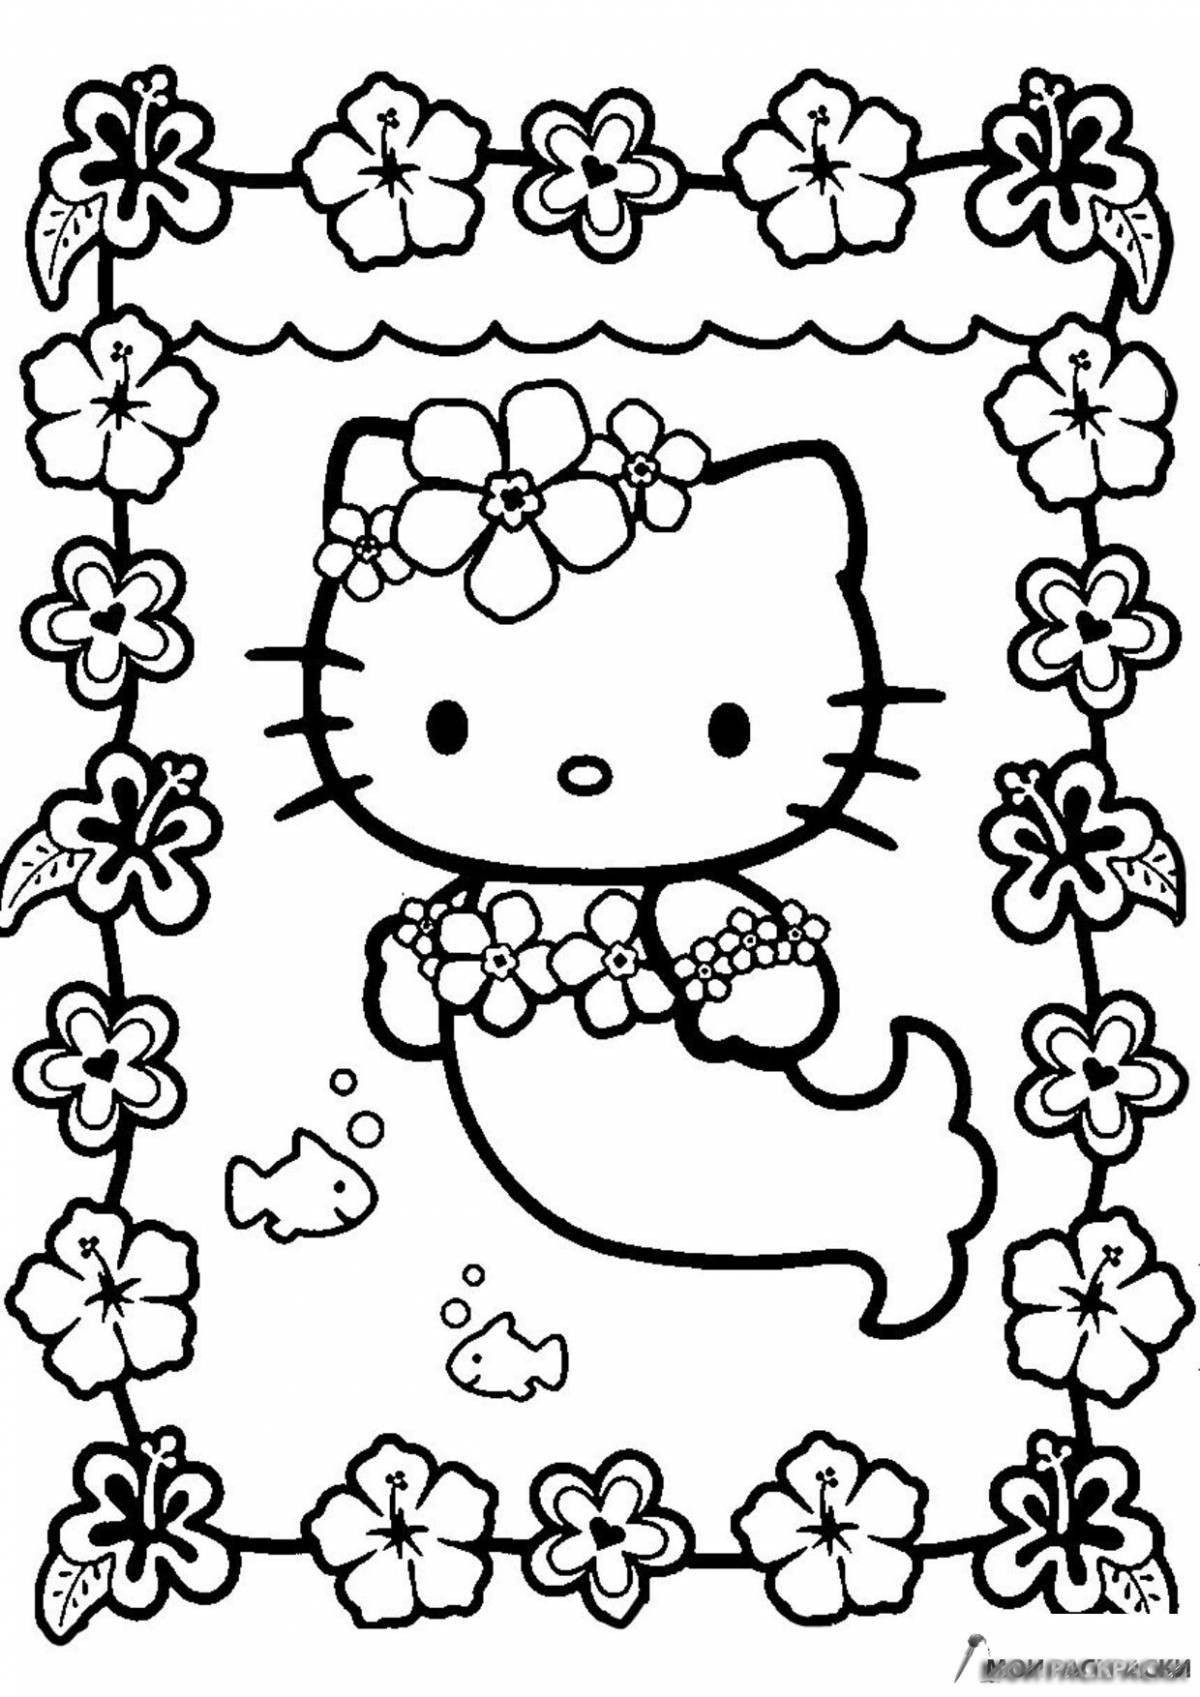 Elegant hello kitty mermaid coloring page